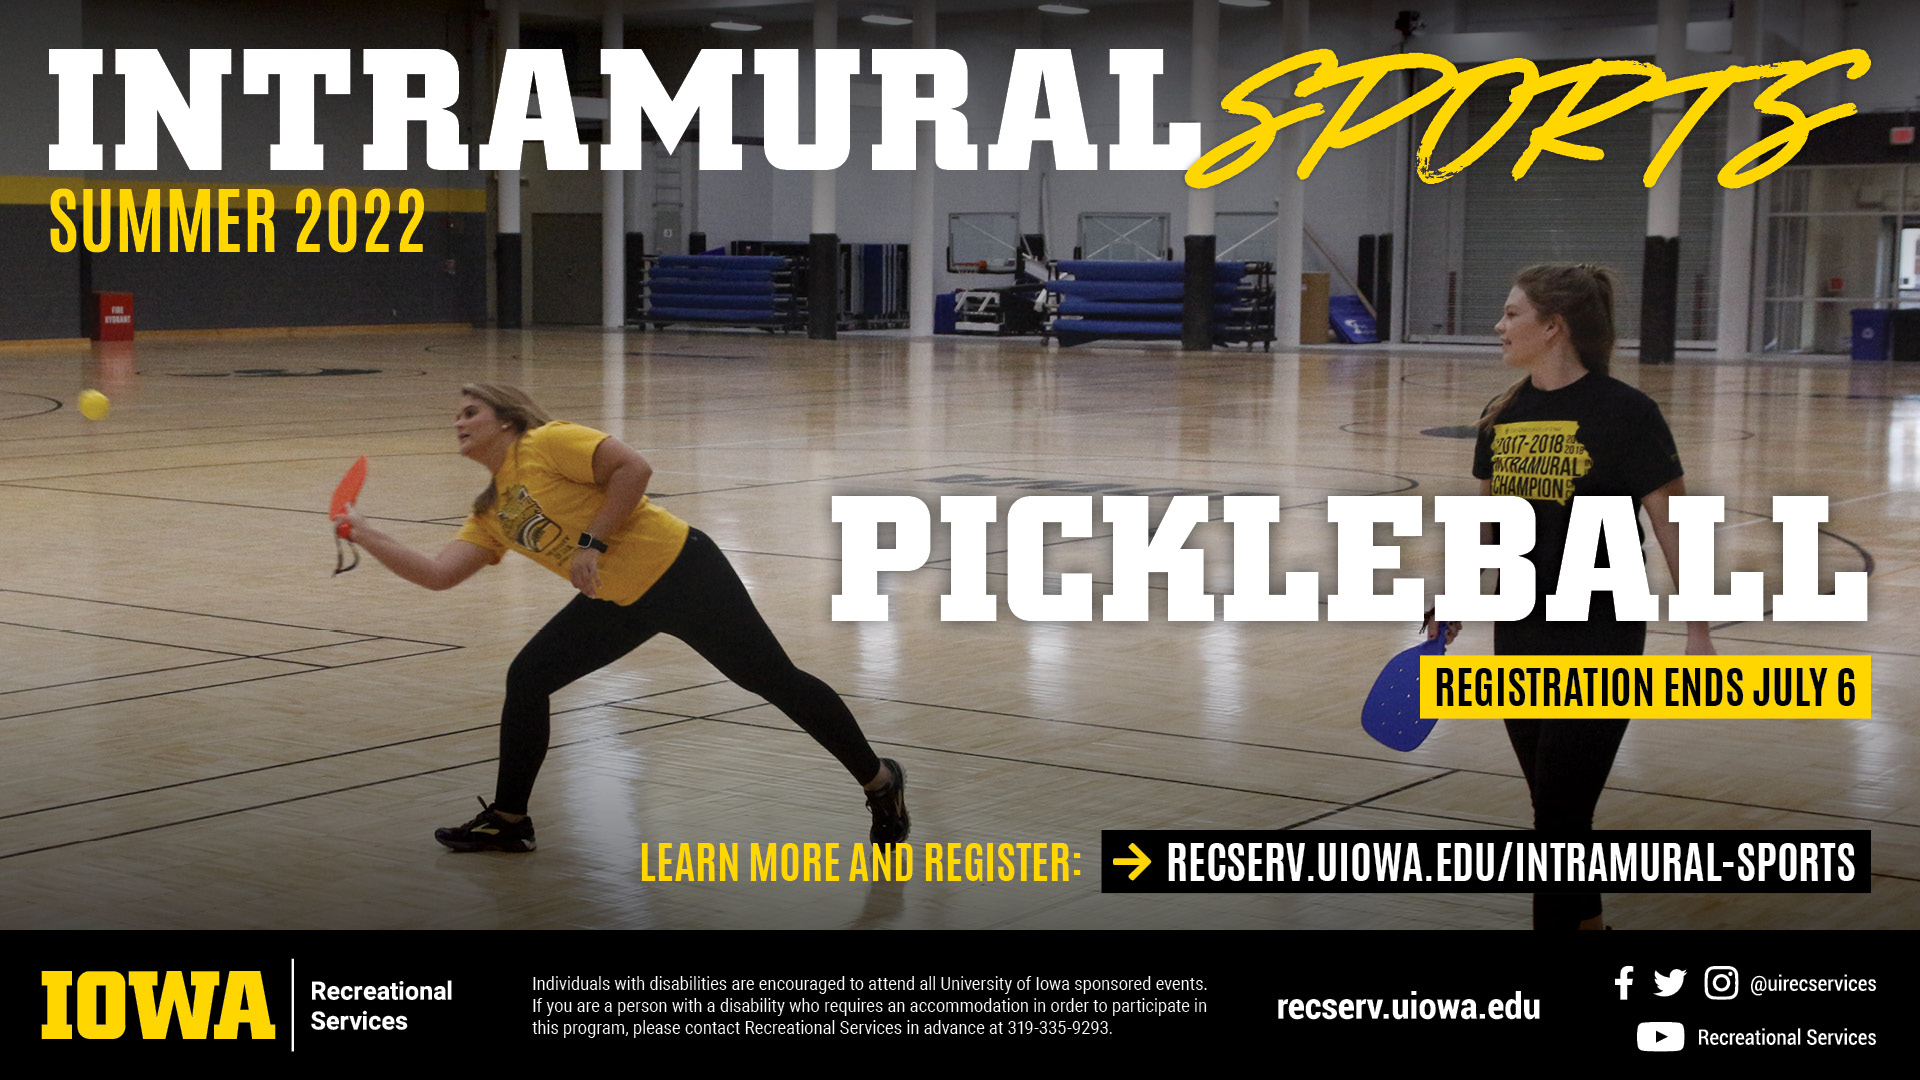 Summer 2022 Intramural Sports Pickleball. Registration ends July 6. Learn more and register: recserv.uiowa.edu/intramural-sports